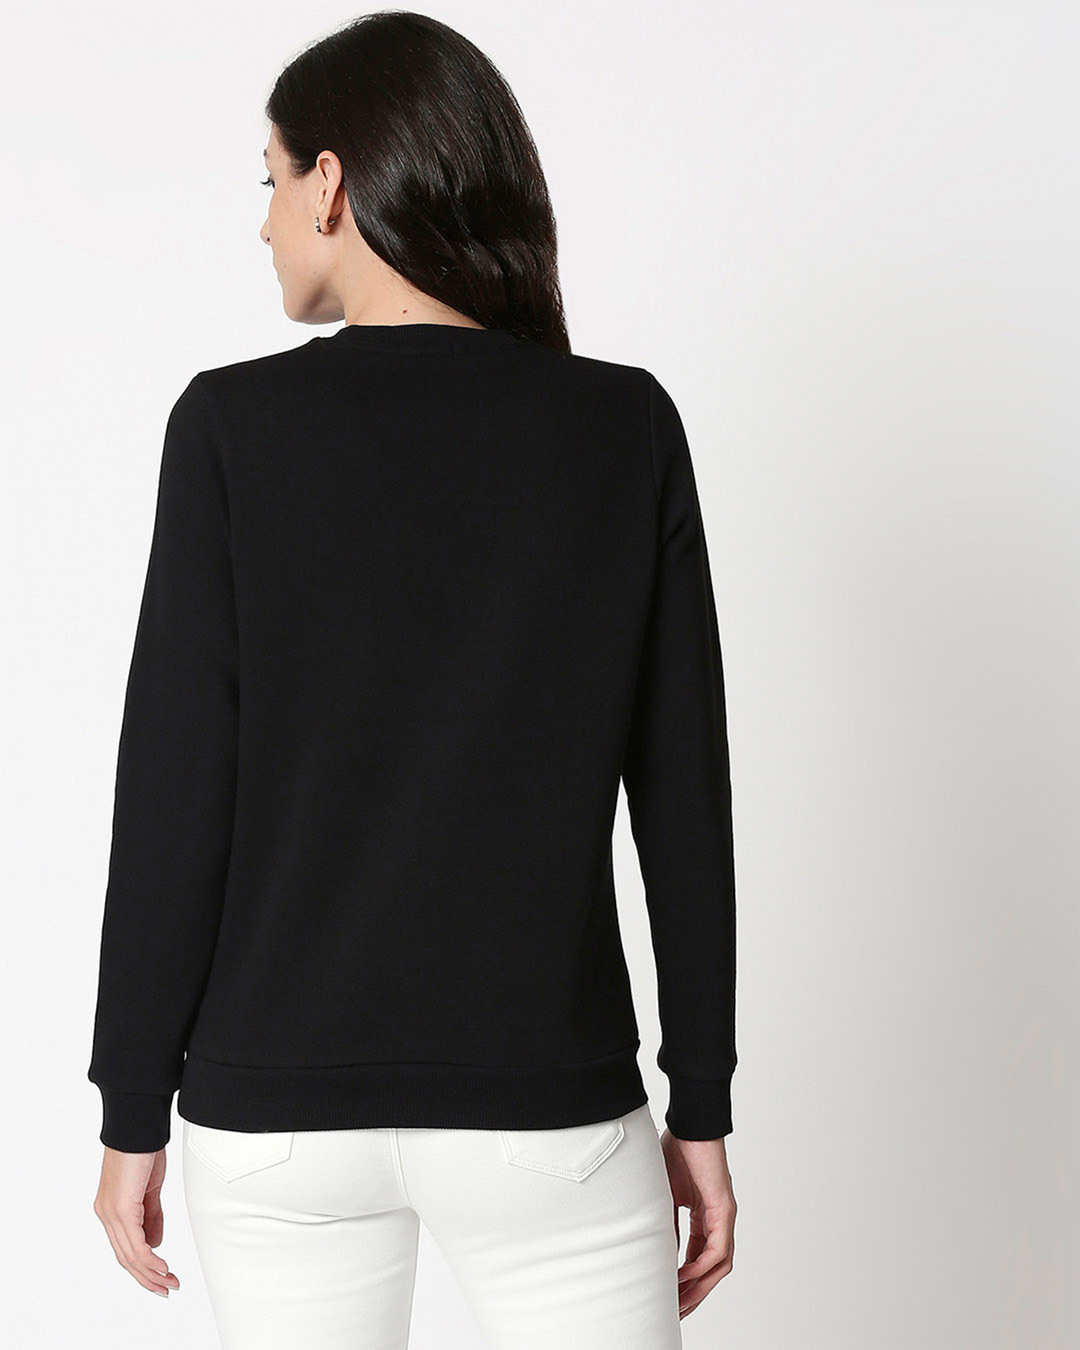 Shop Out Of The World Fleece Sweatshirt Black-Back